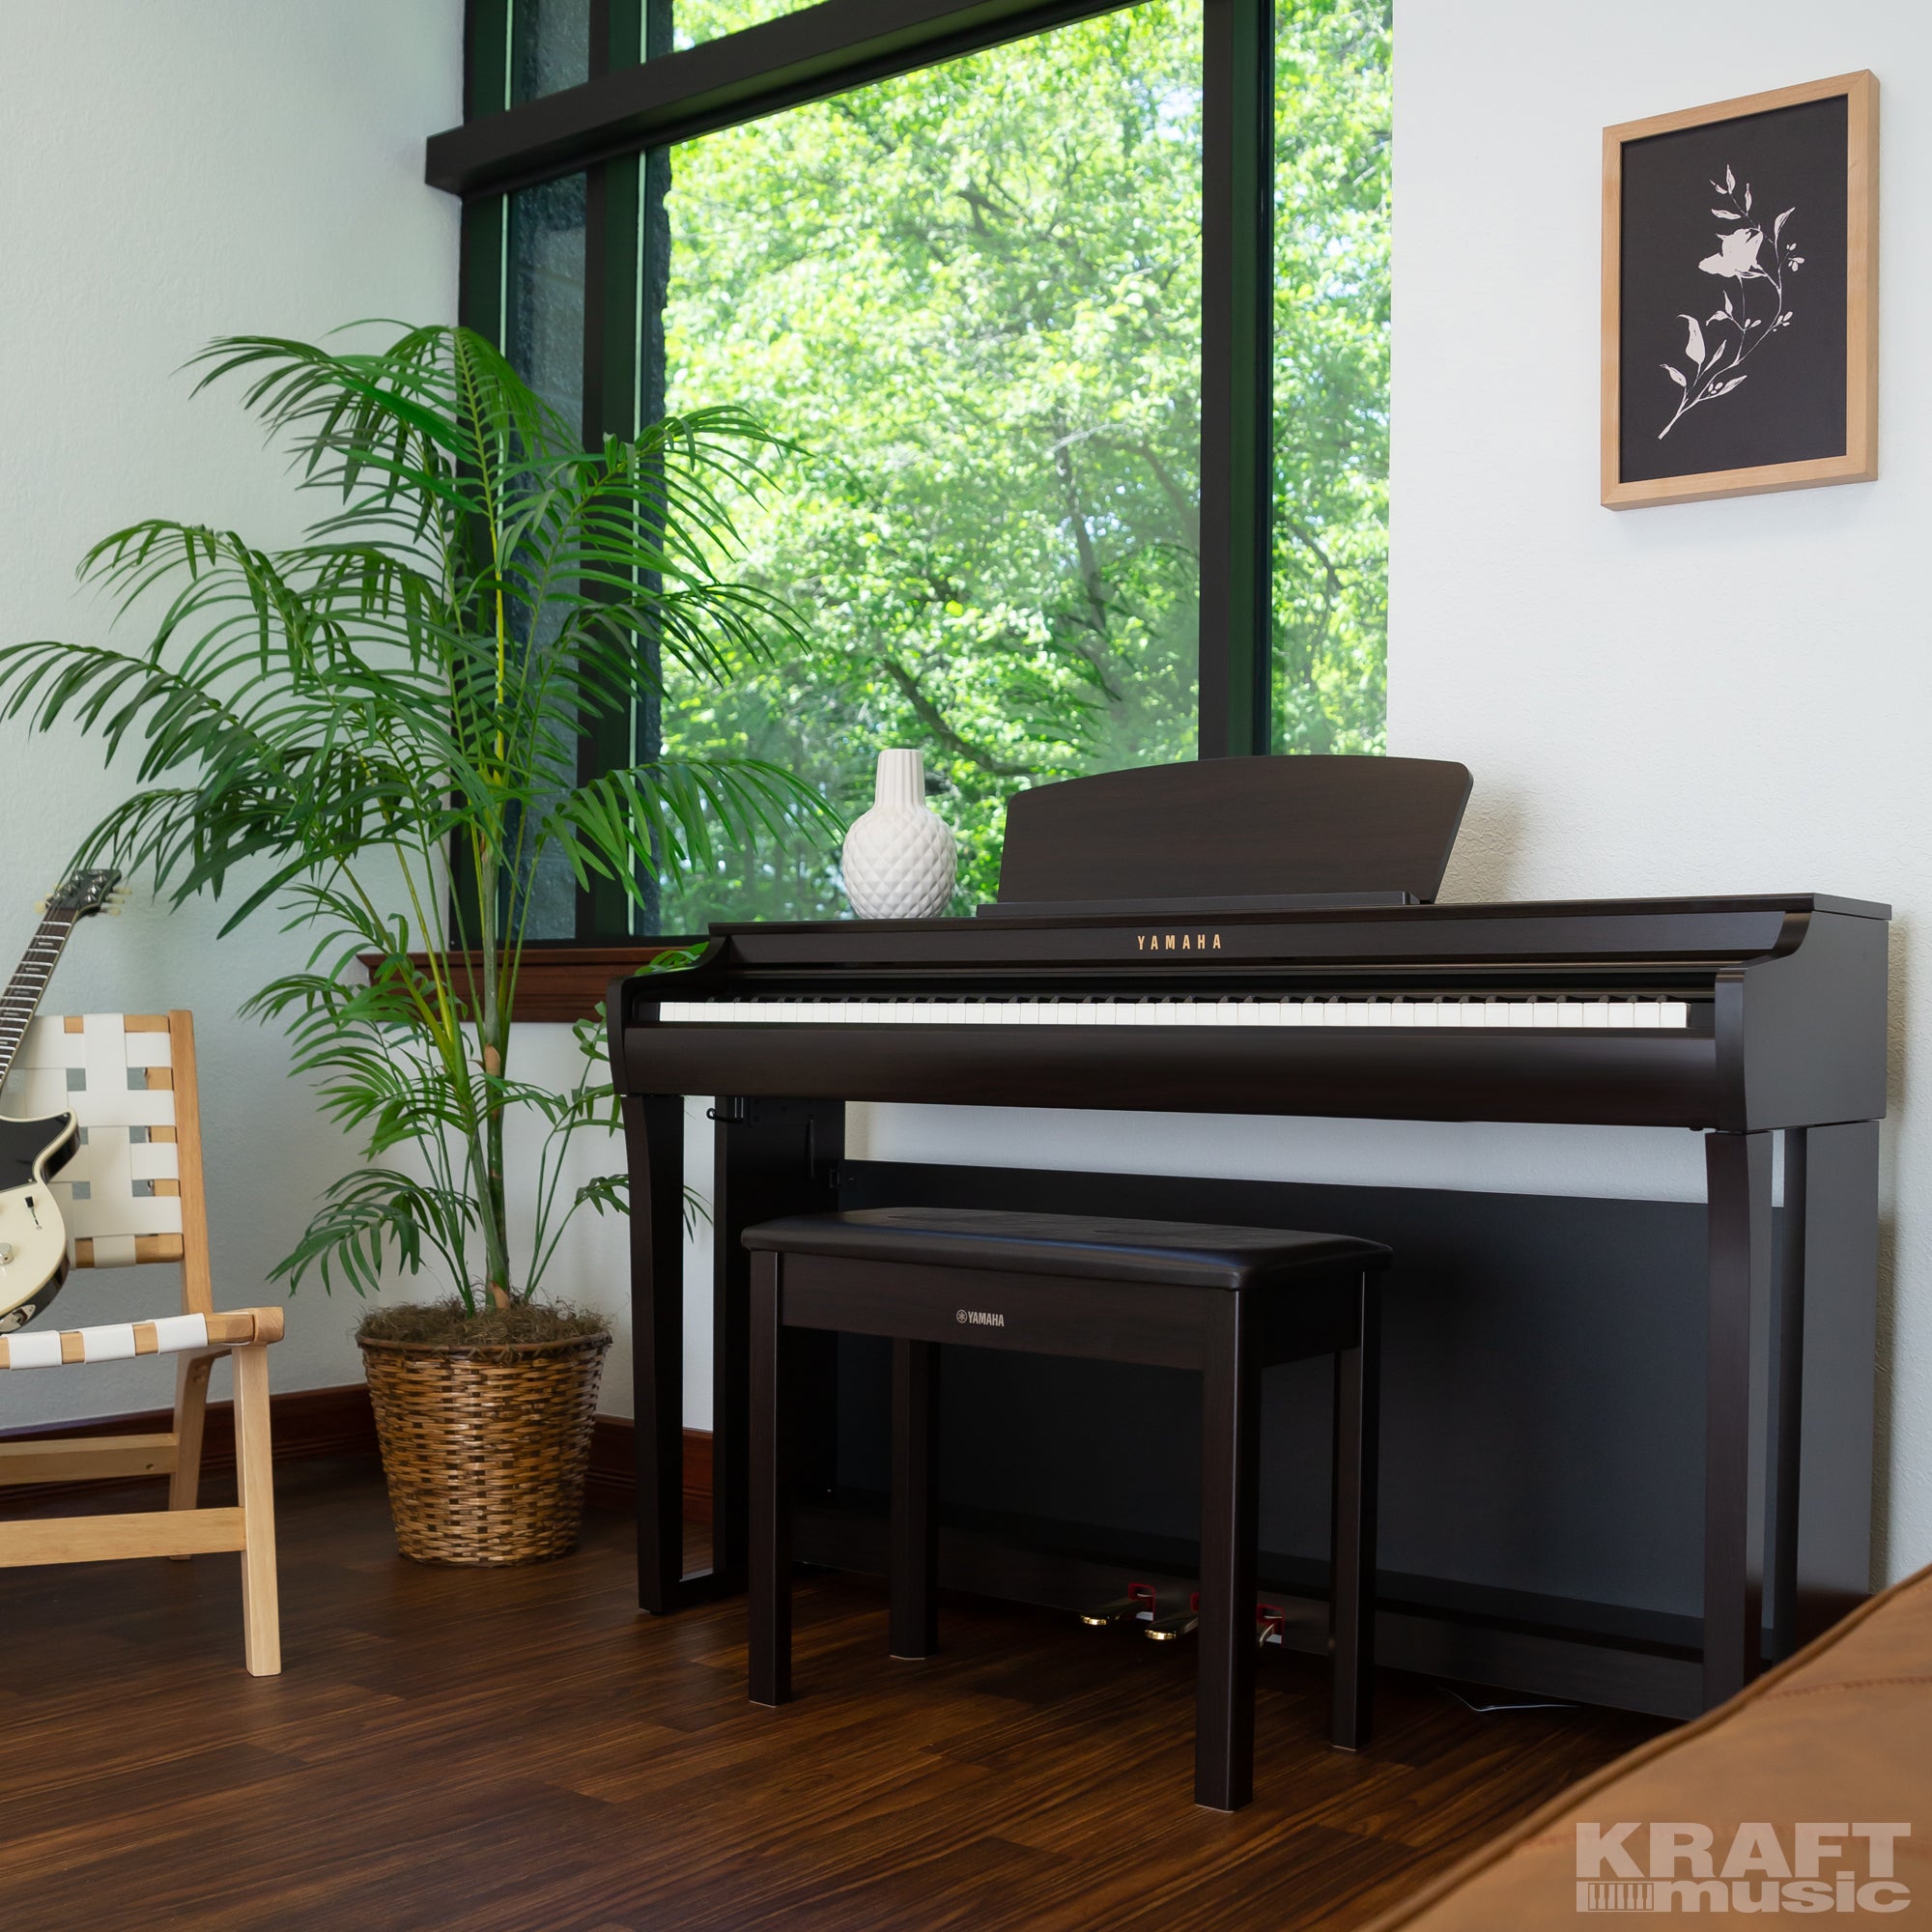 Yamaha Clavinova CLP-725 Digital Piano - Rosewood - left facing in a stylish living room